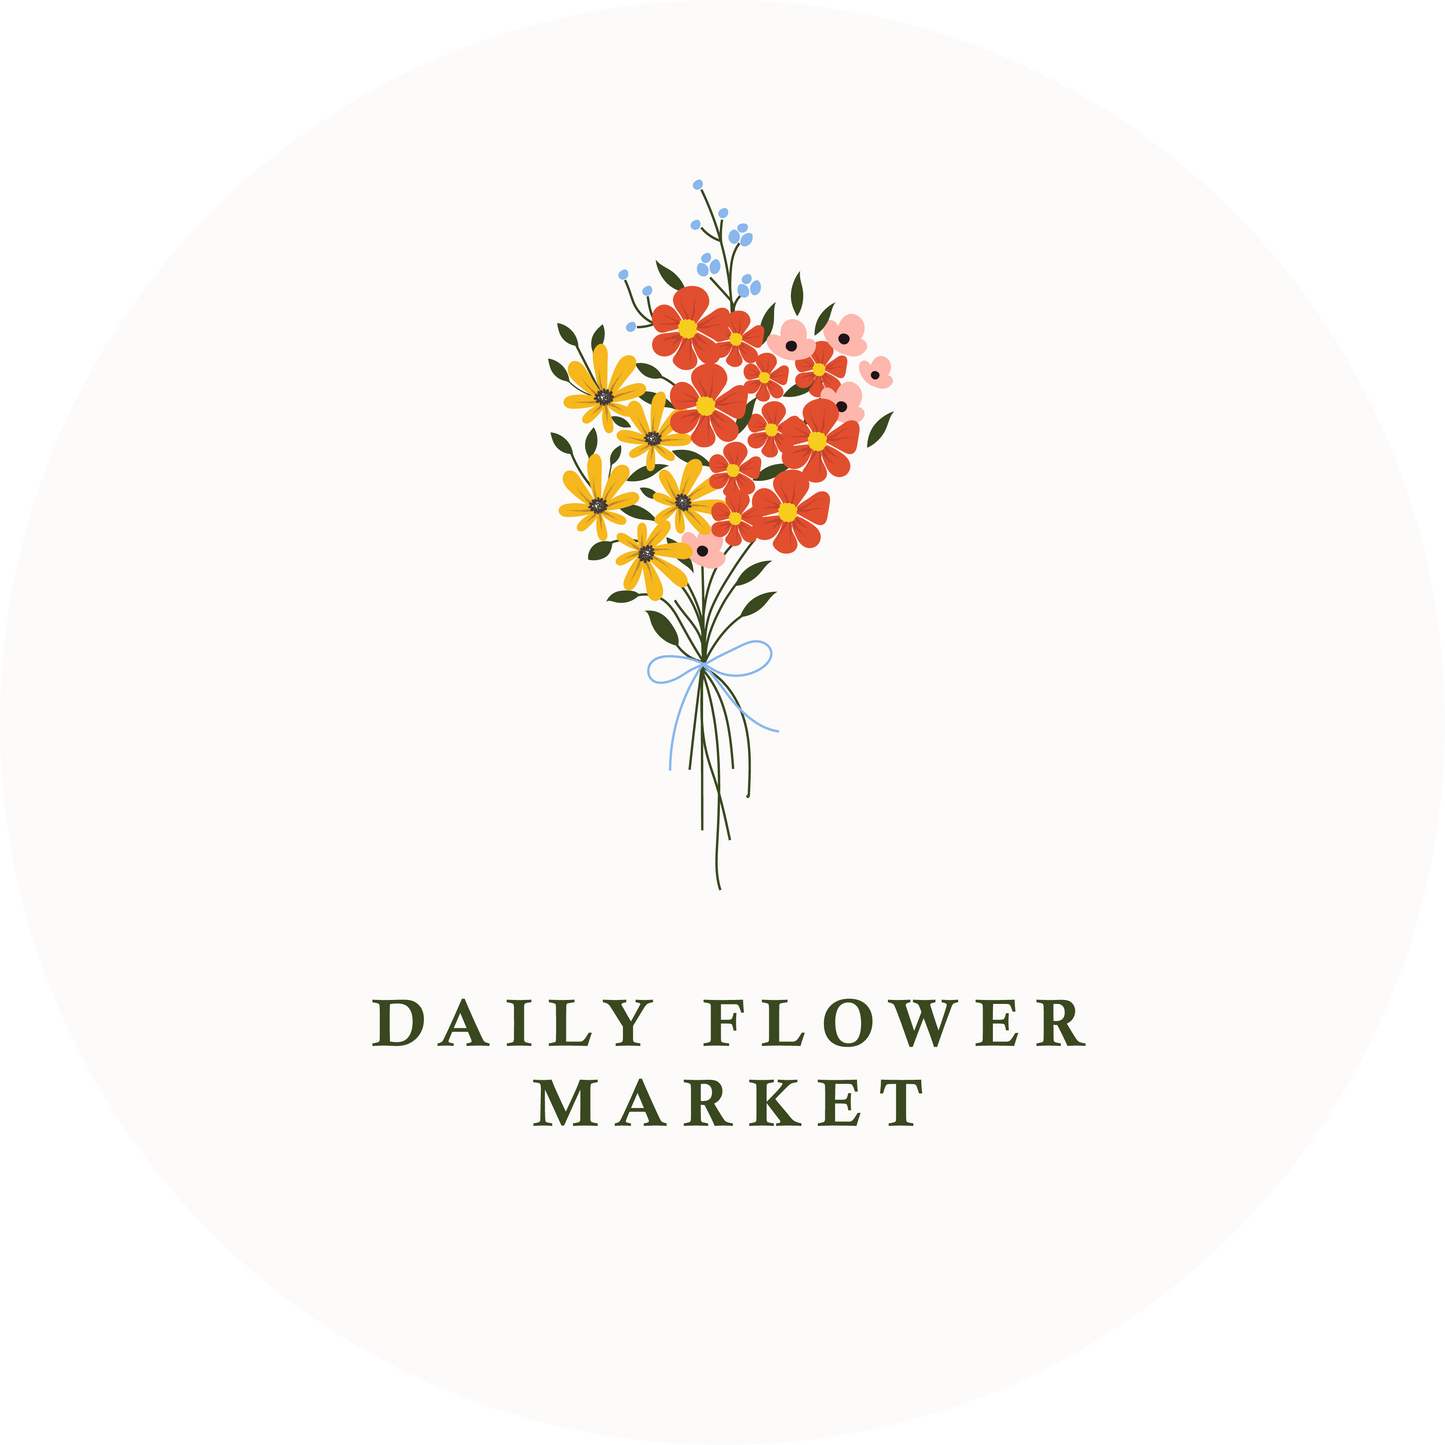 Daily Flower Market